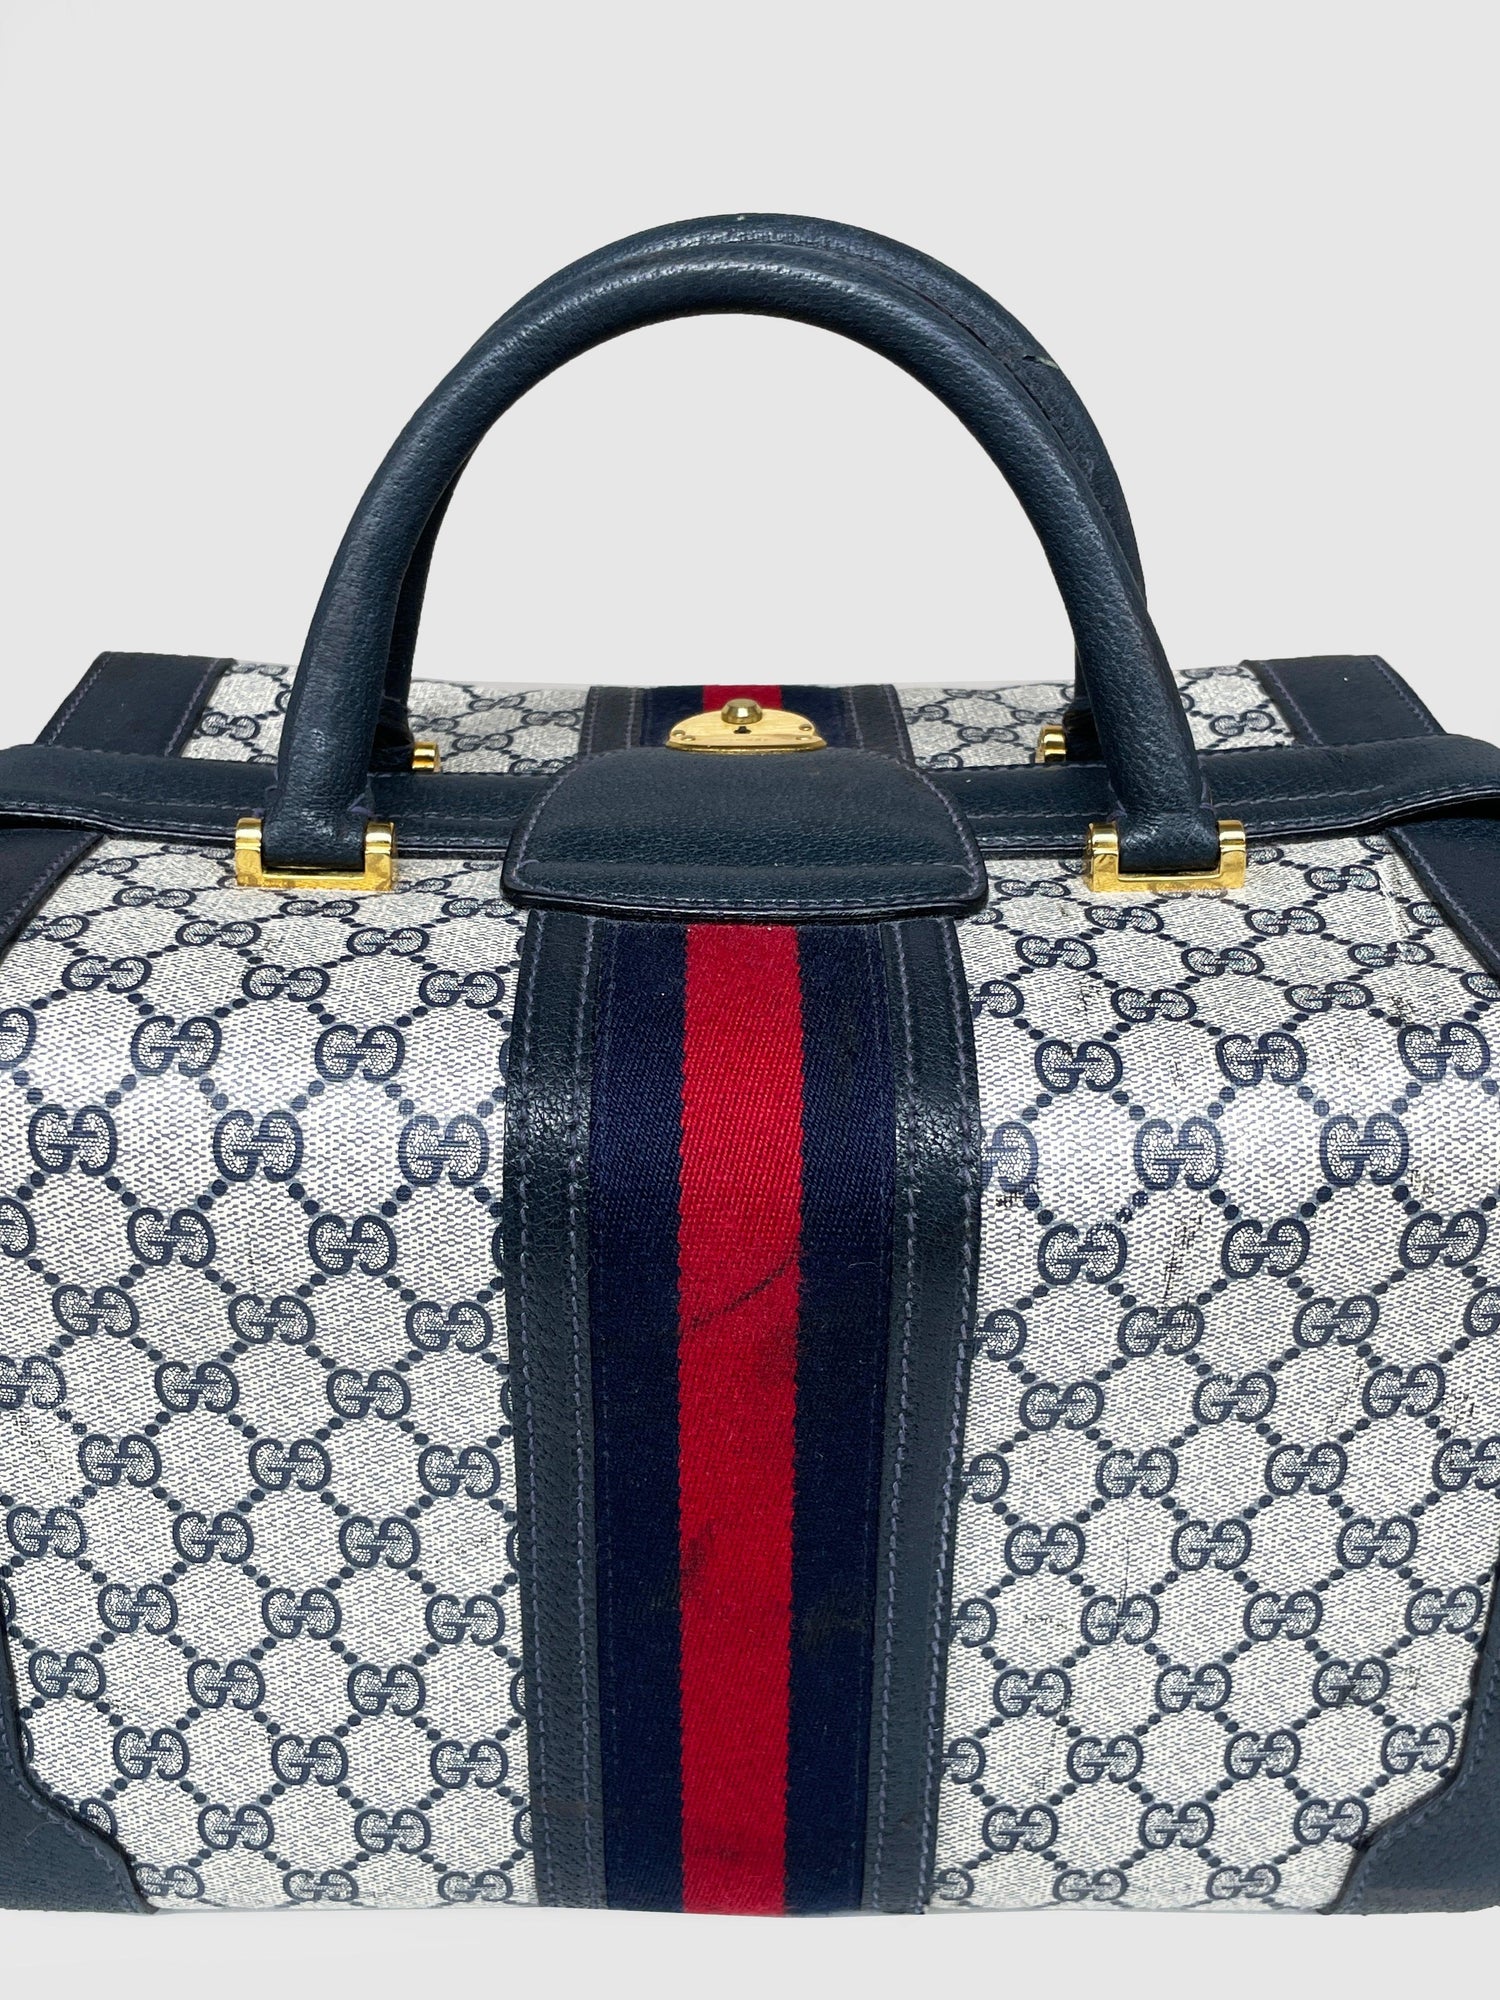 Gucci Trunk Vanity Case Travel Bag